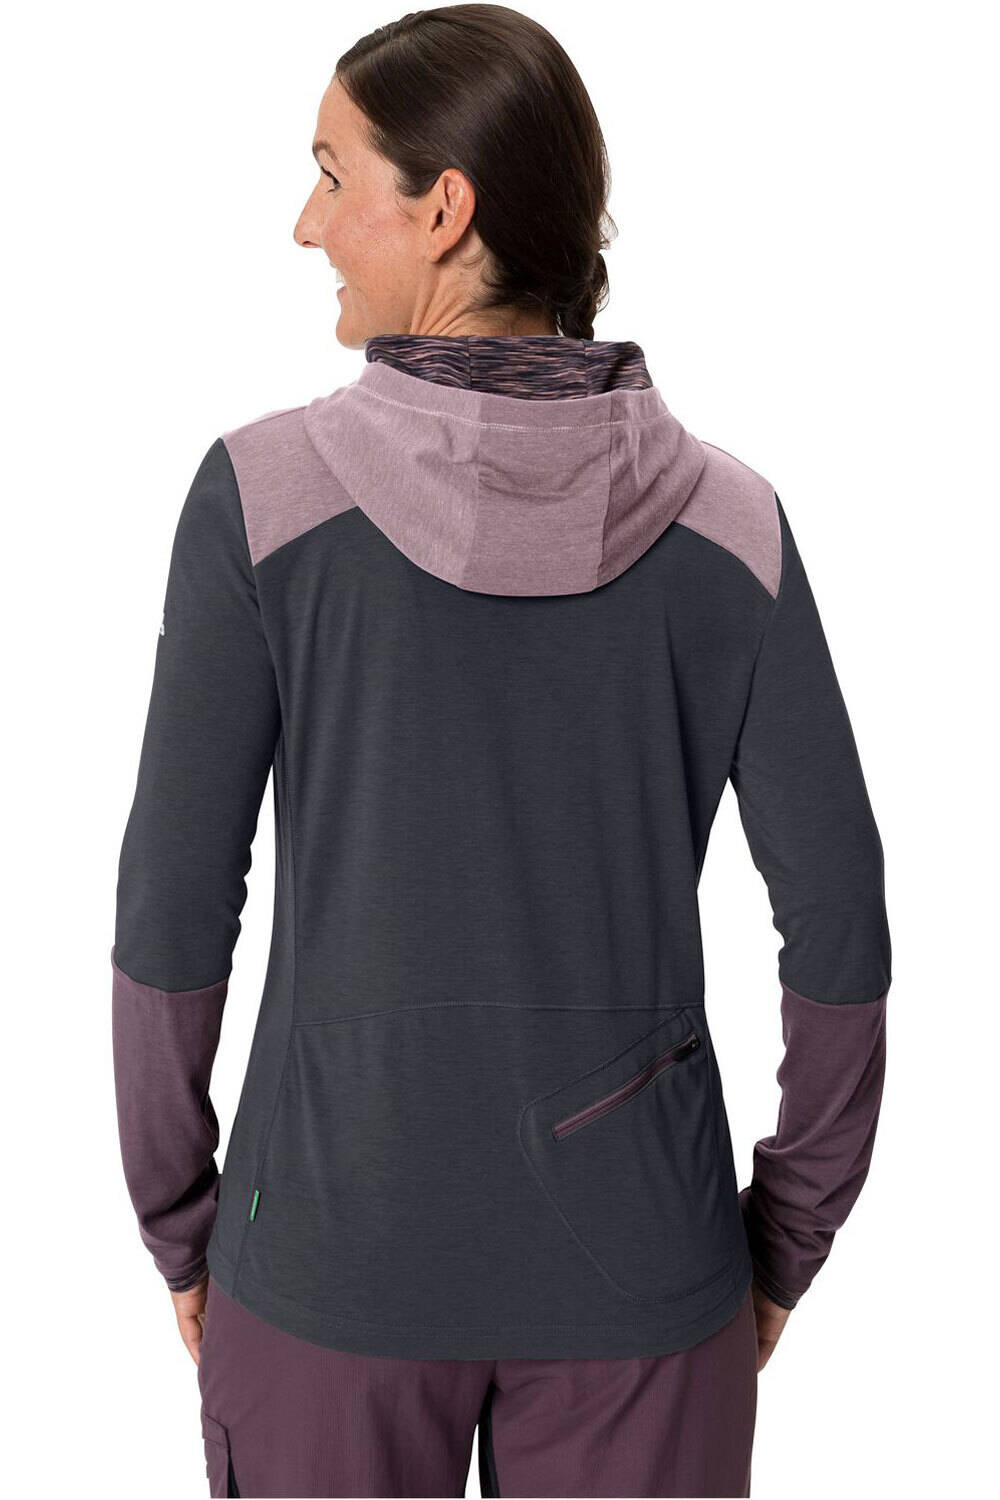 Vaude maillot manga larga mujer Women's Tremalzo LS Shirt vista trasera